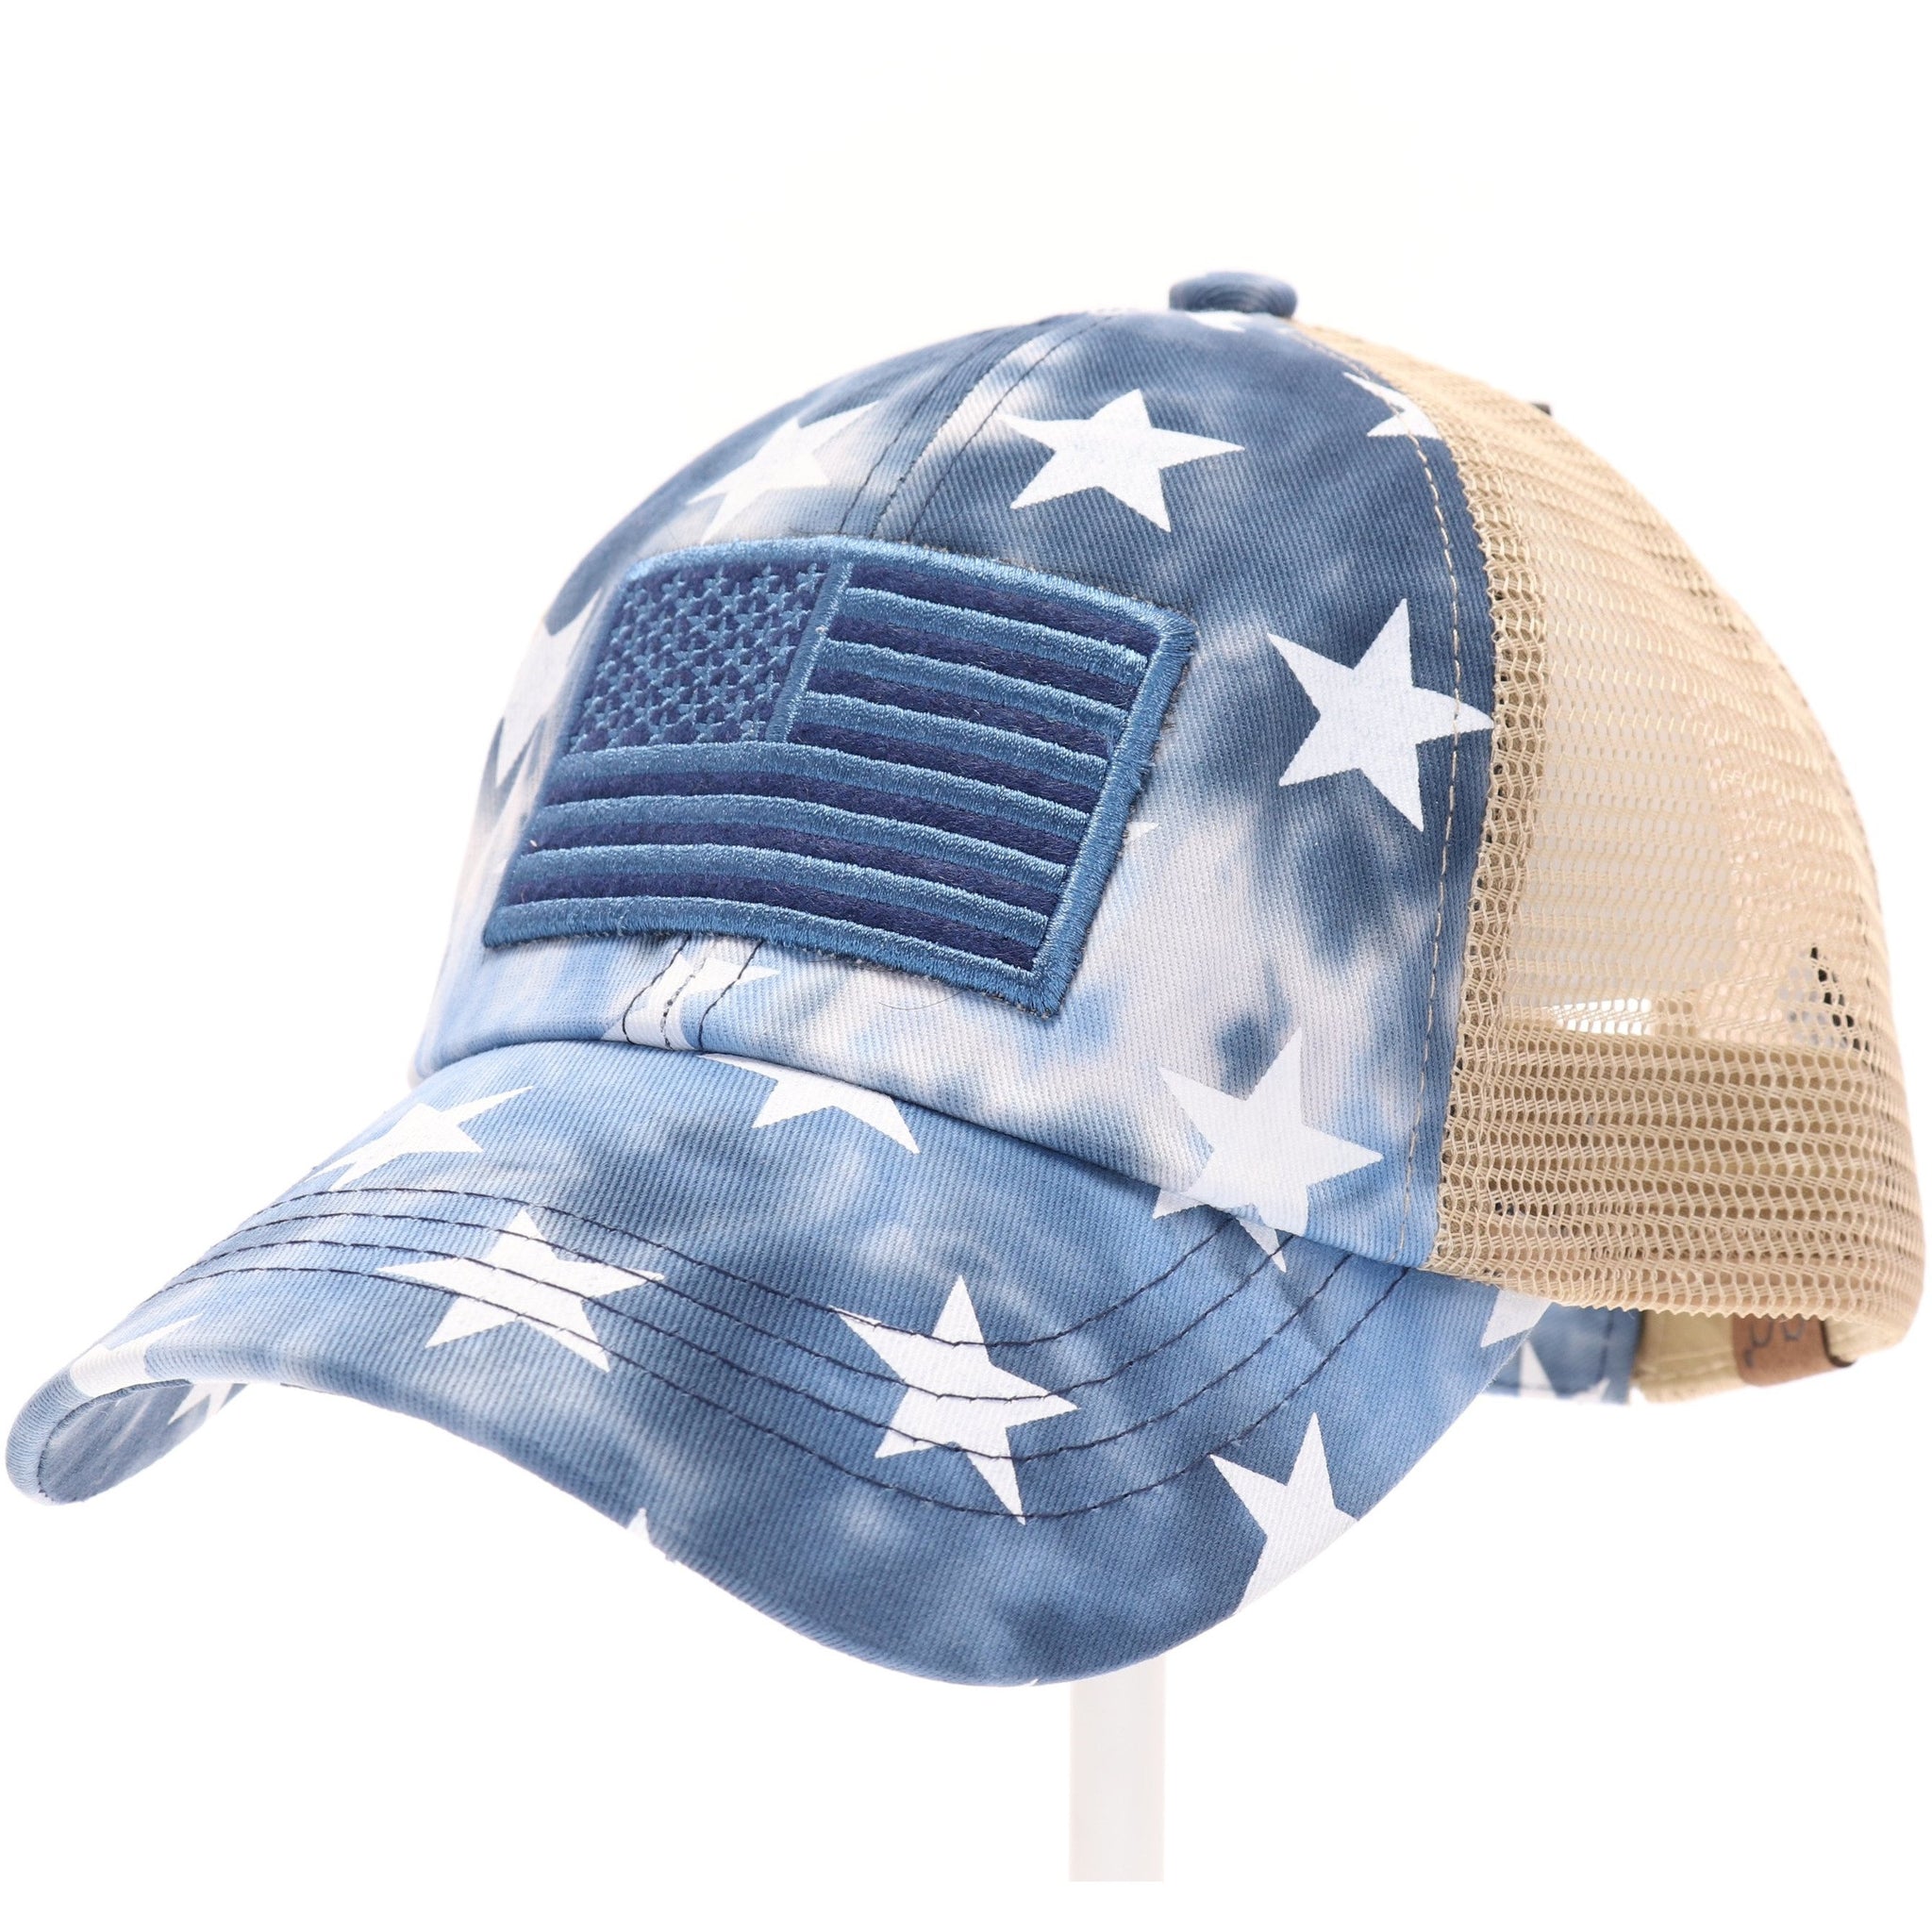 Tie Dye Star Print with USA Flag Patch Criss Cross High Pony CC Ball Cap -Adult